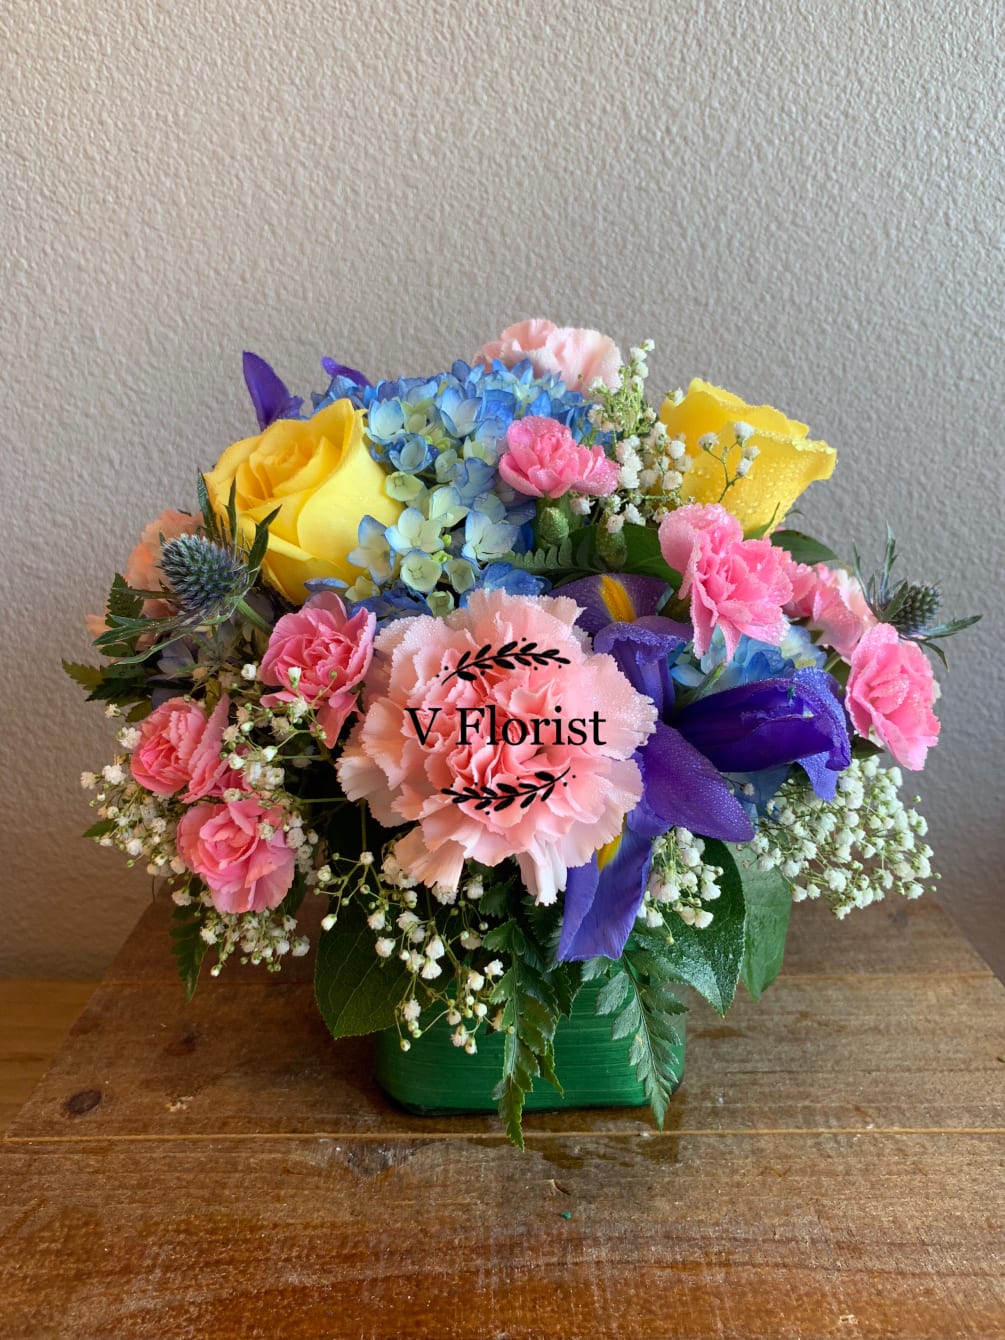 Designer&#039;s choice of blue hydrangea, yellow roses, pink carnations, iris, and mini